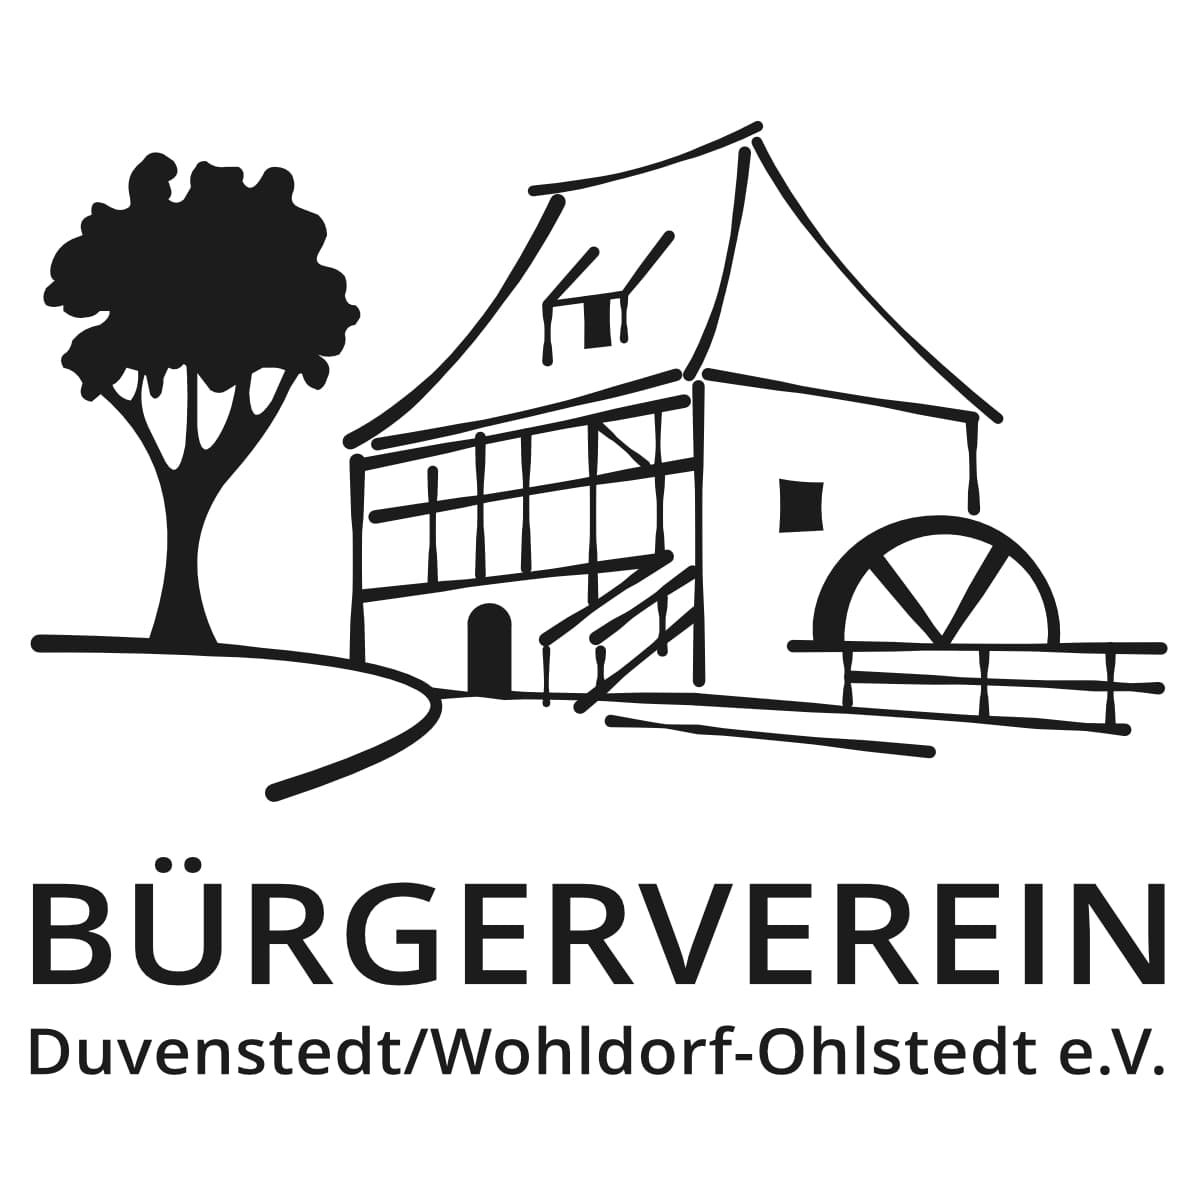 Bürgerverein Duvenstedt/Wohldorf-Ohlstedt Logo